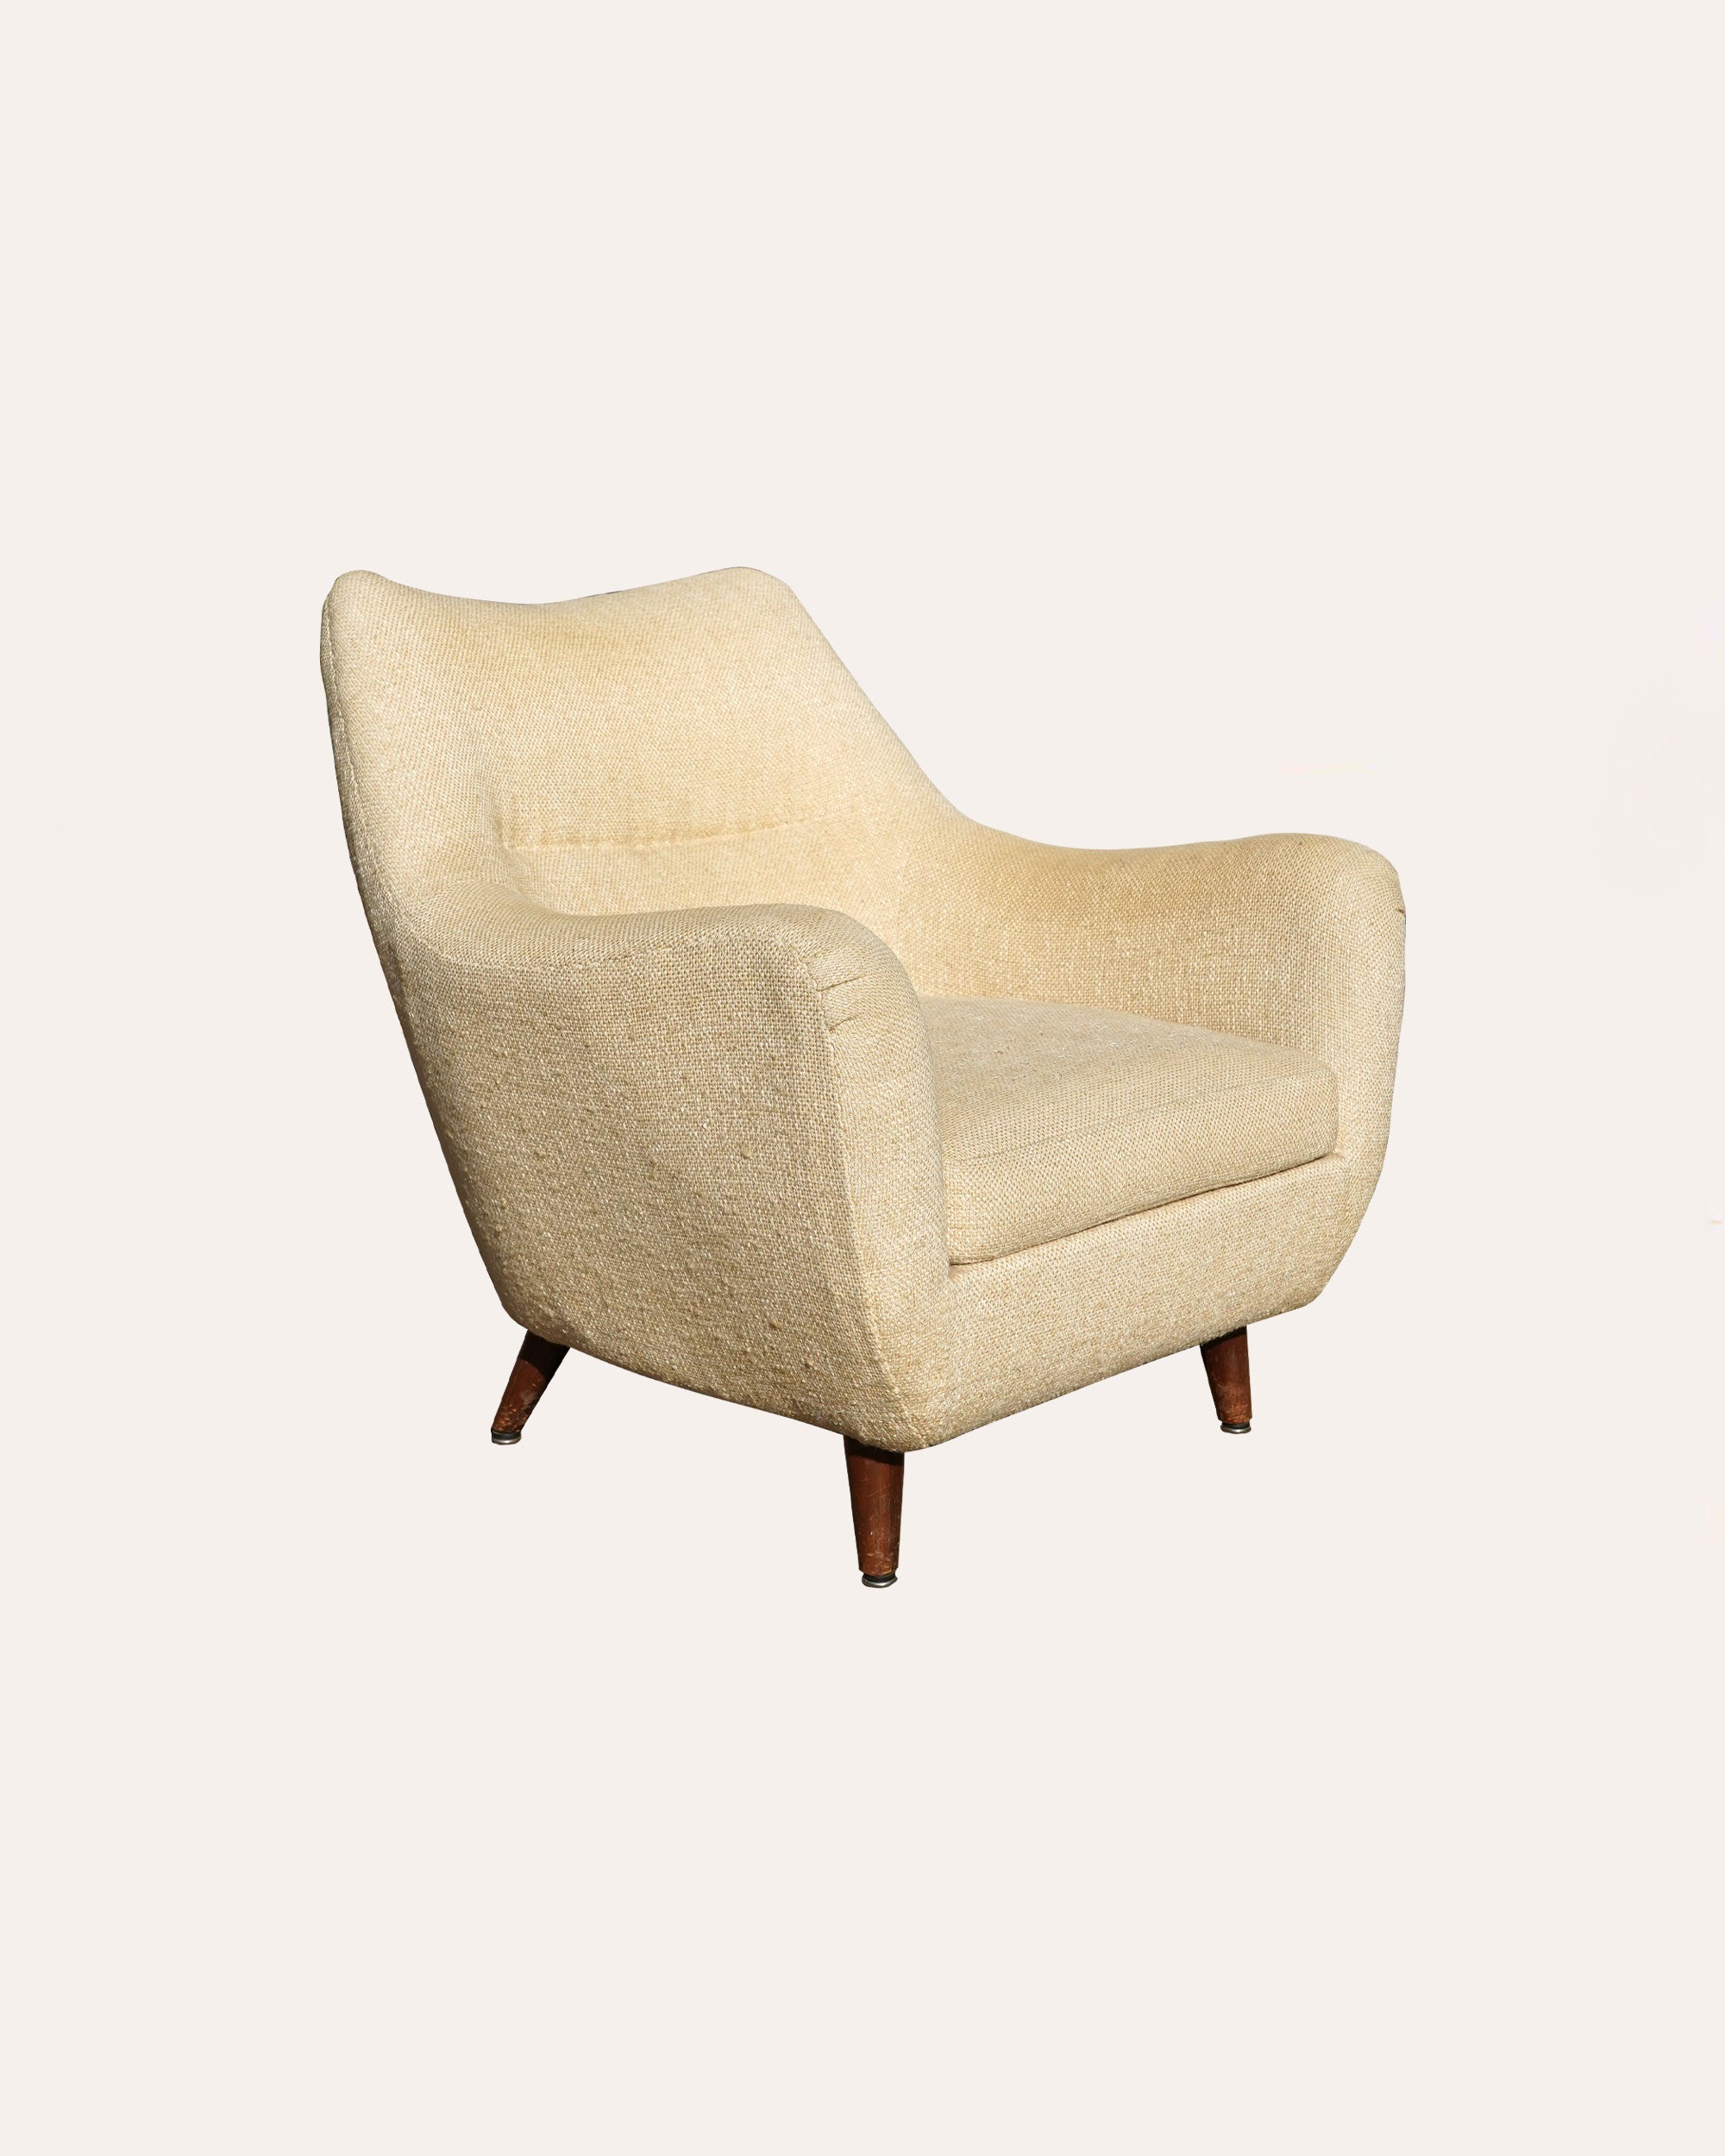 Pair of Danish 1970's armchairs in original upholstery